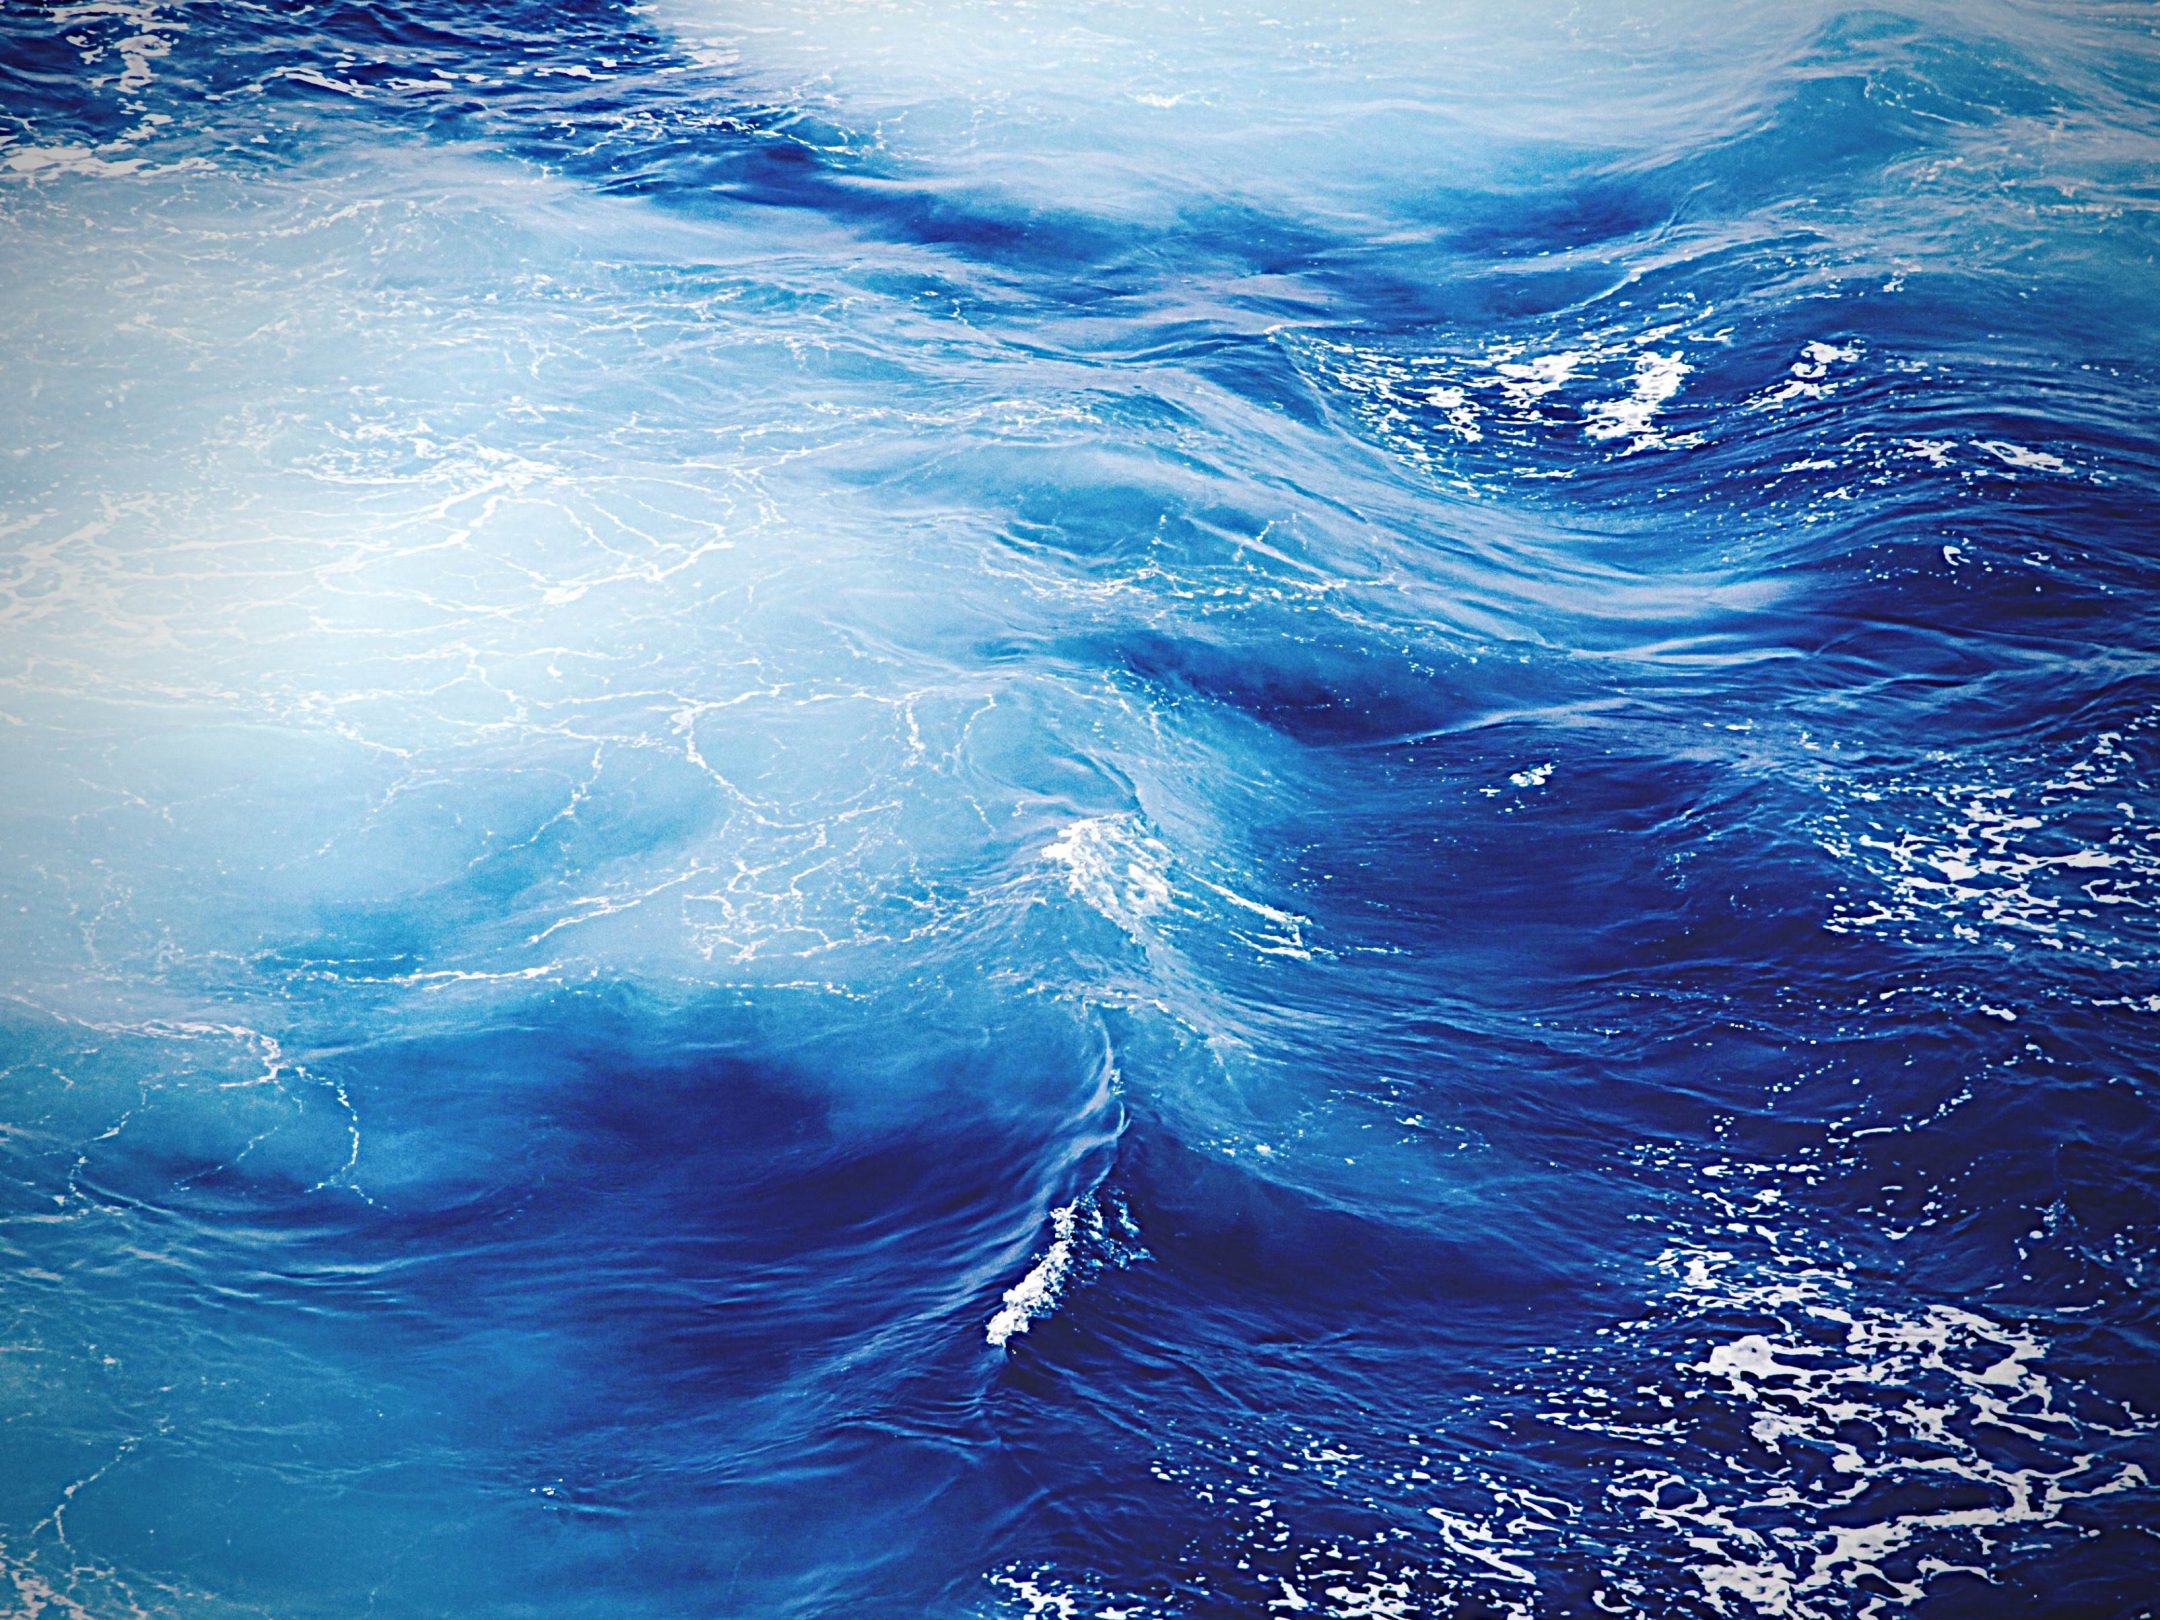 2160x1620 iPad wallpaper 4k Ocean Sea Water Wave Blue iPad Wallpaper 2160x1620 pixels resolution